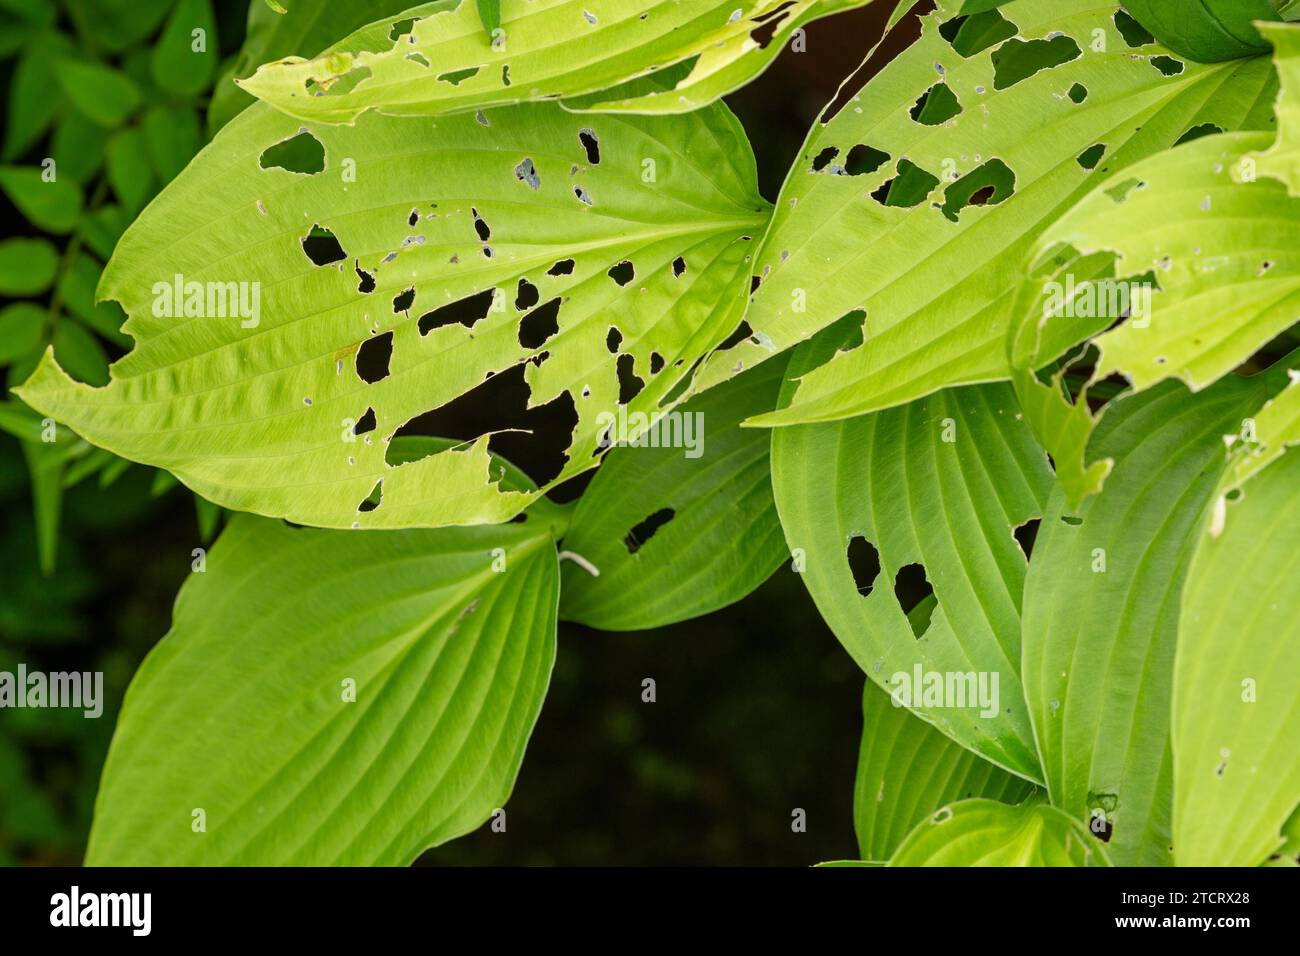 Hosta leaves damaged by snails Stock Photo